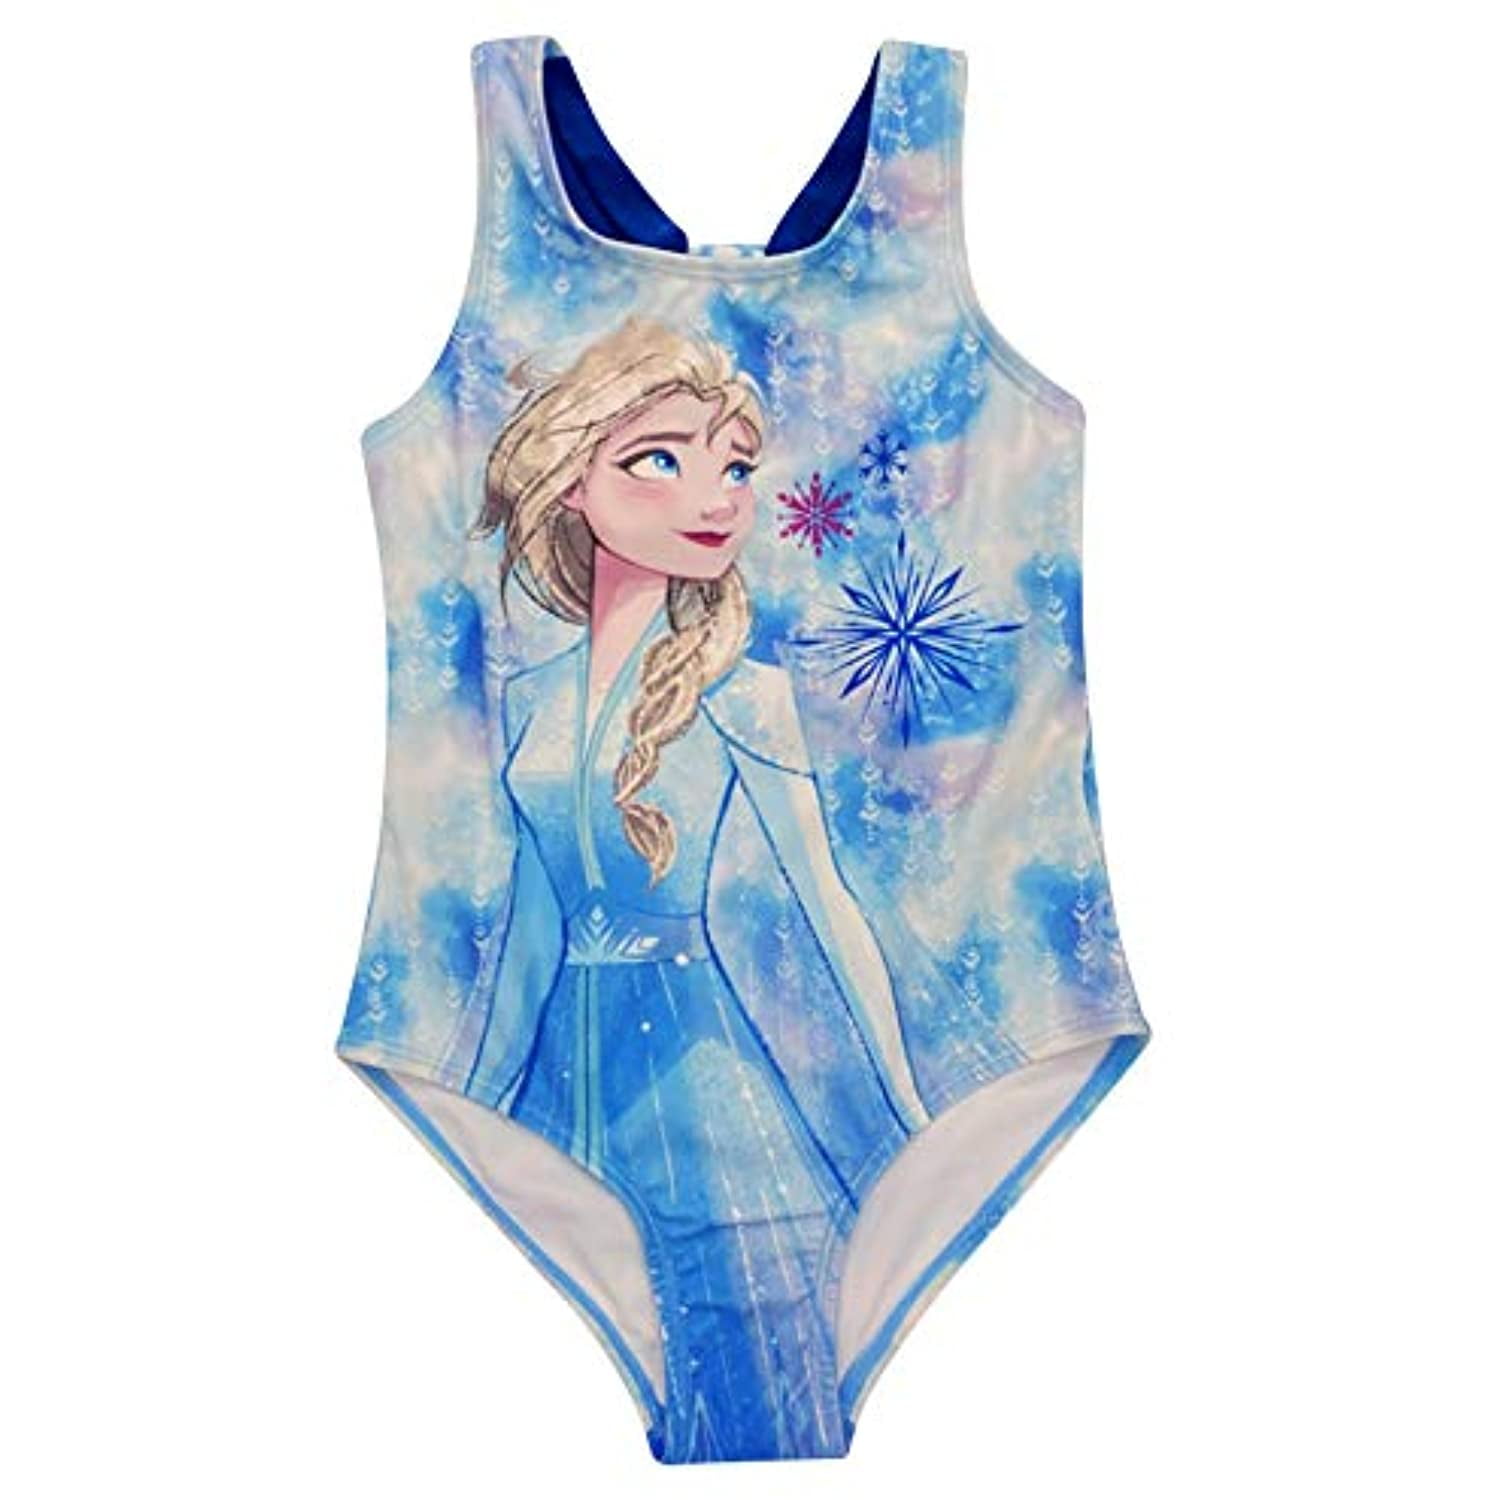 Girls Frozen Swimming Beach safe Towel Anna Elsa Swimsuits sun costume kids size 